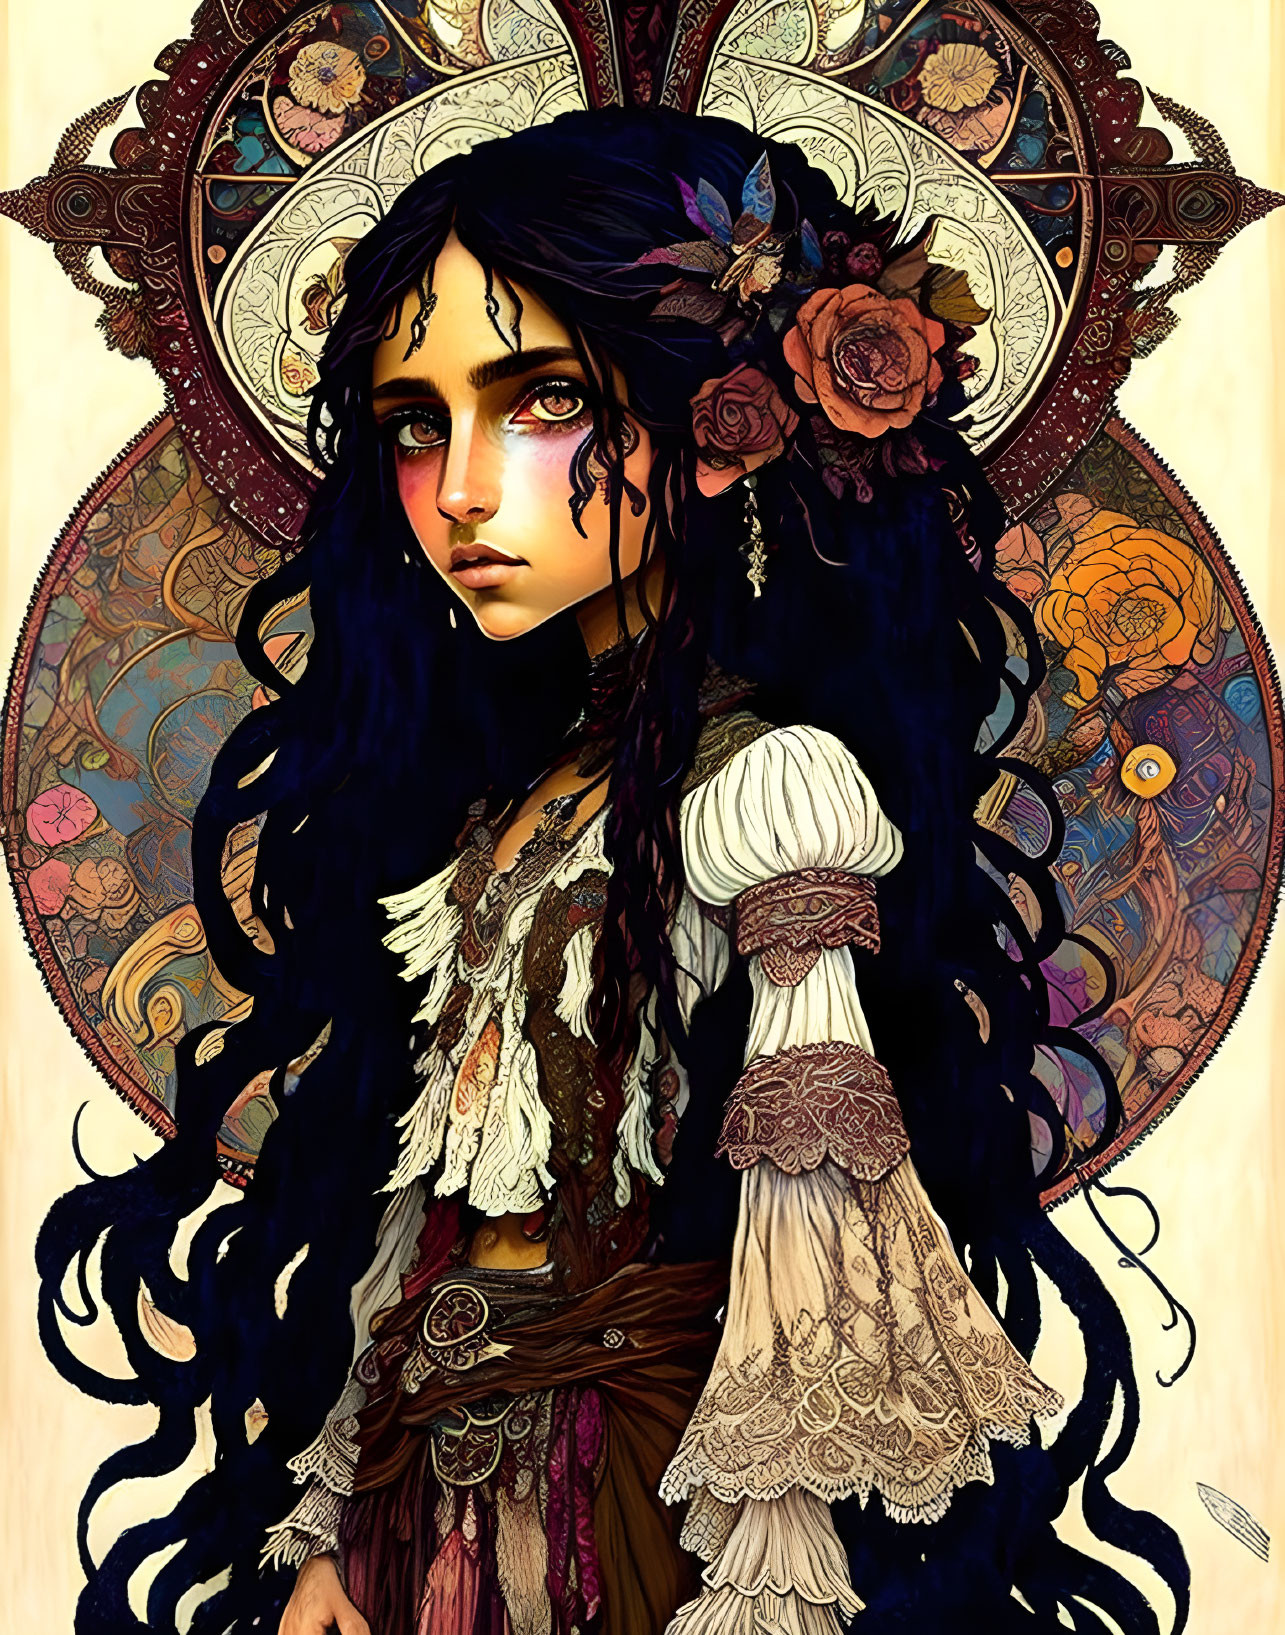 Detailed Illustration of Female Figure with Black Hair and Roses on Golden Mandala Background